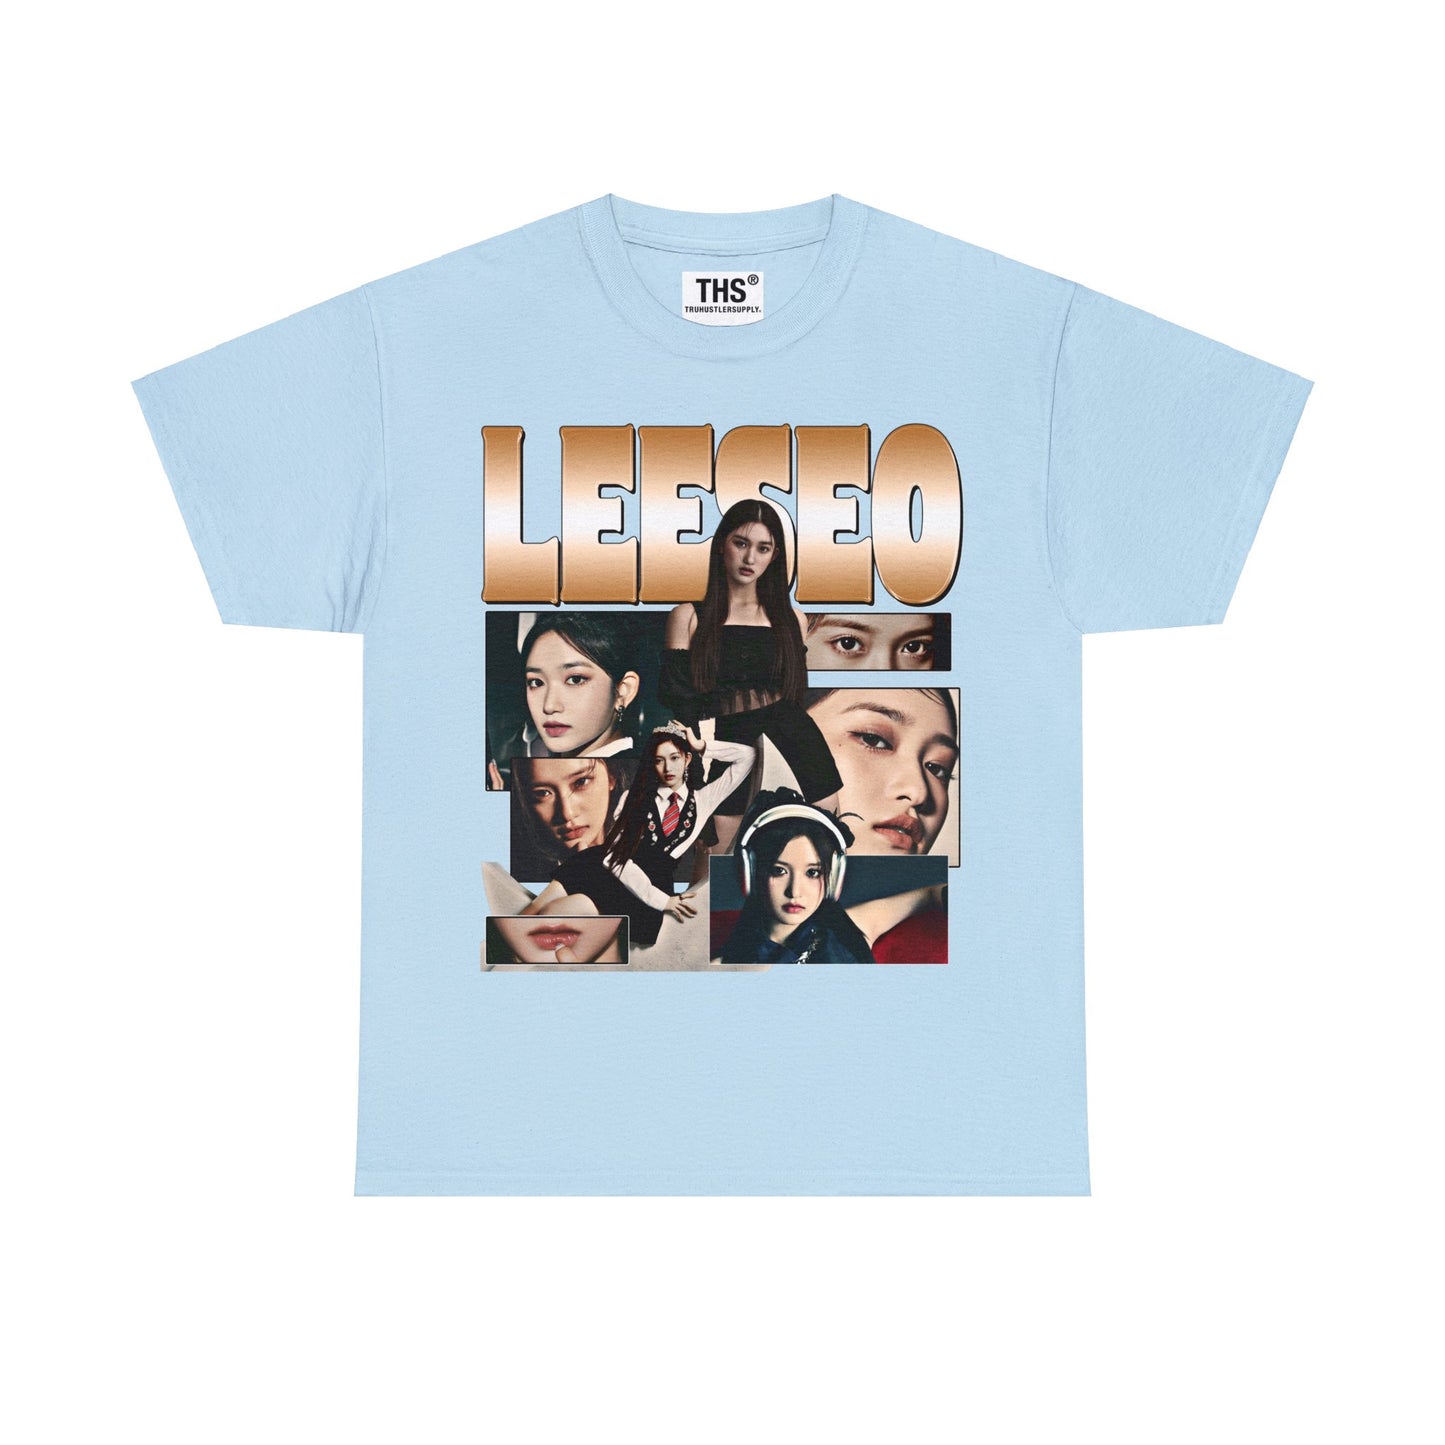 Leeseo IVE Bootleg Graphic T-Shirt